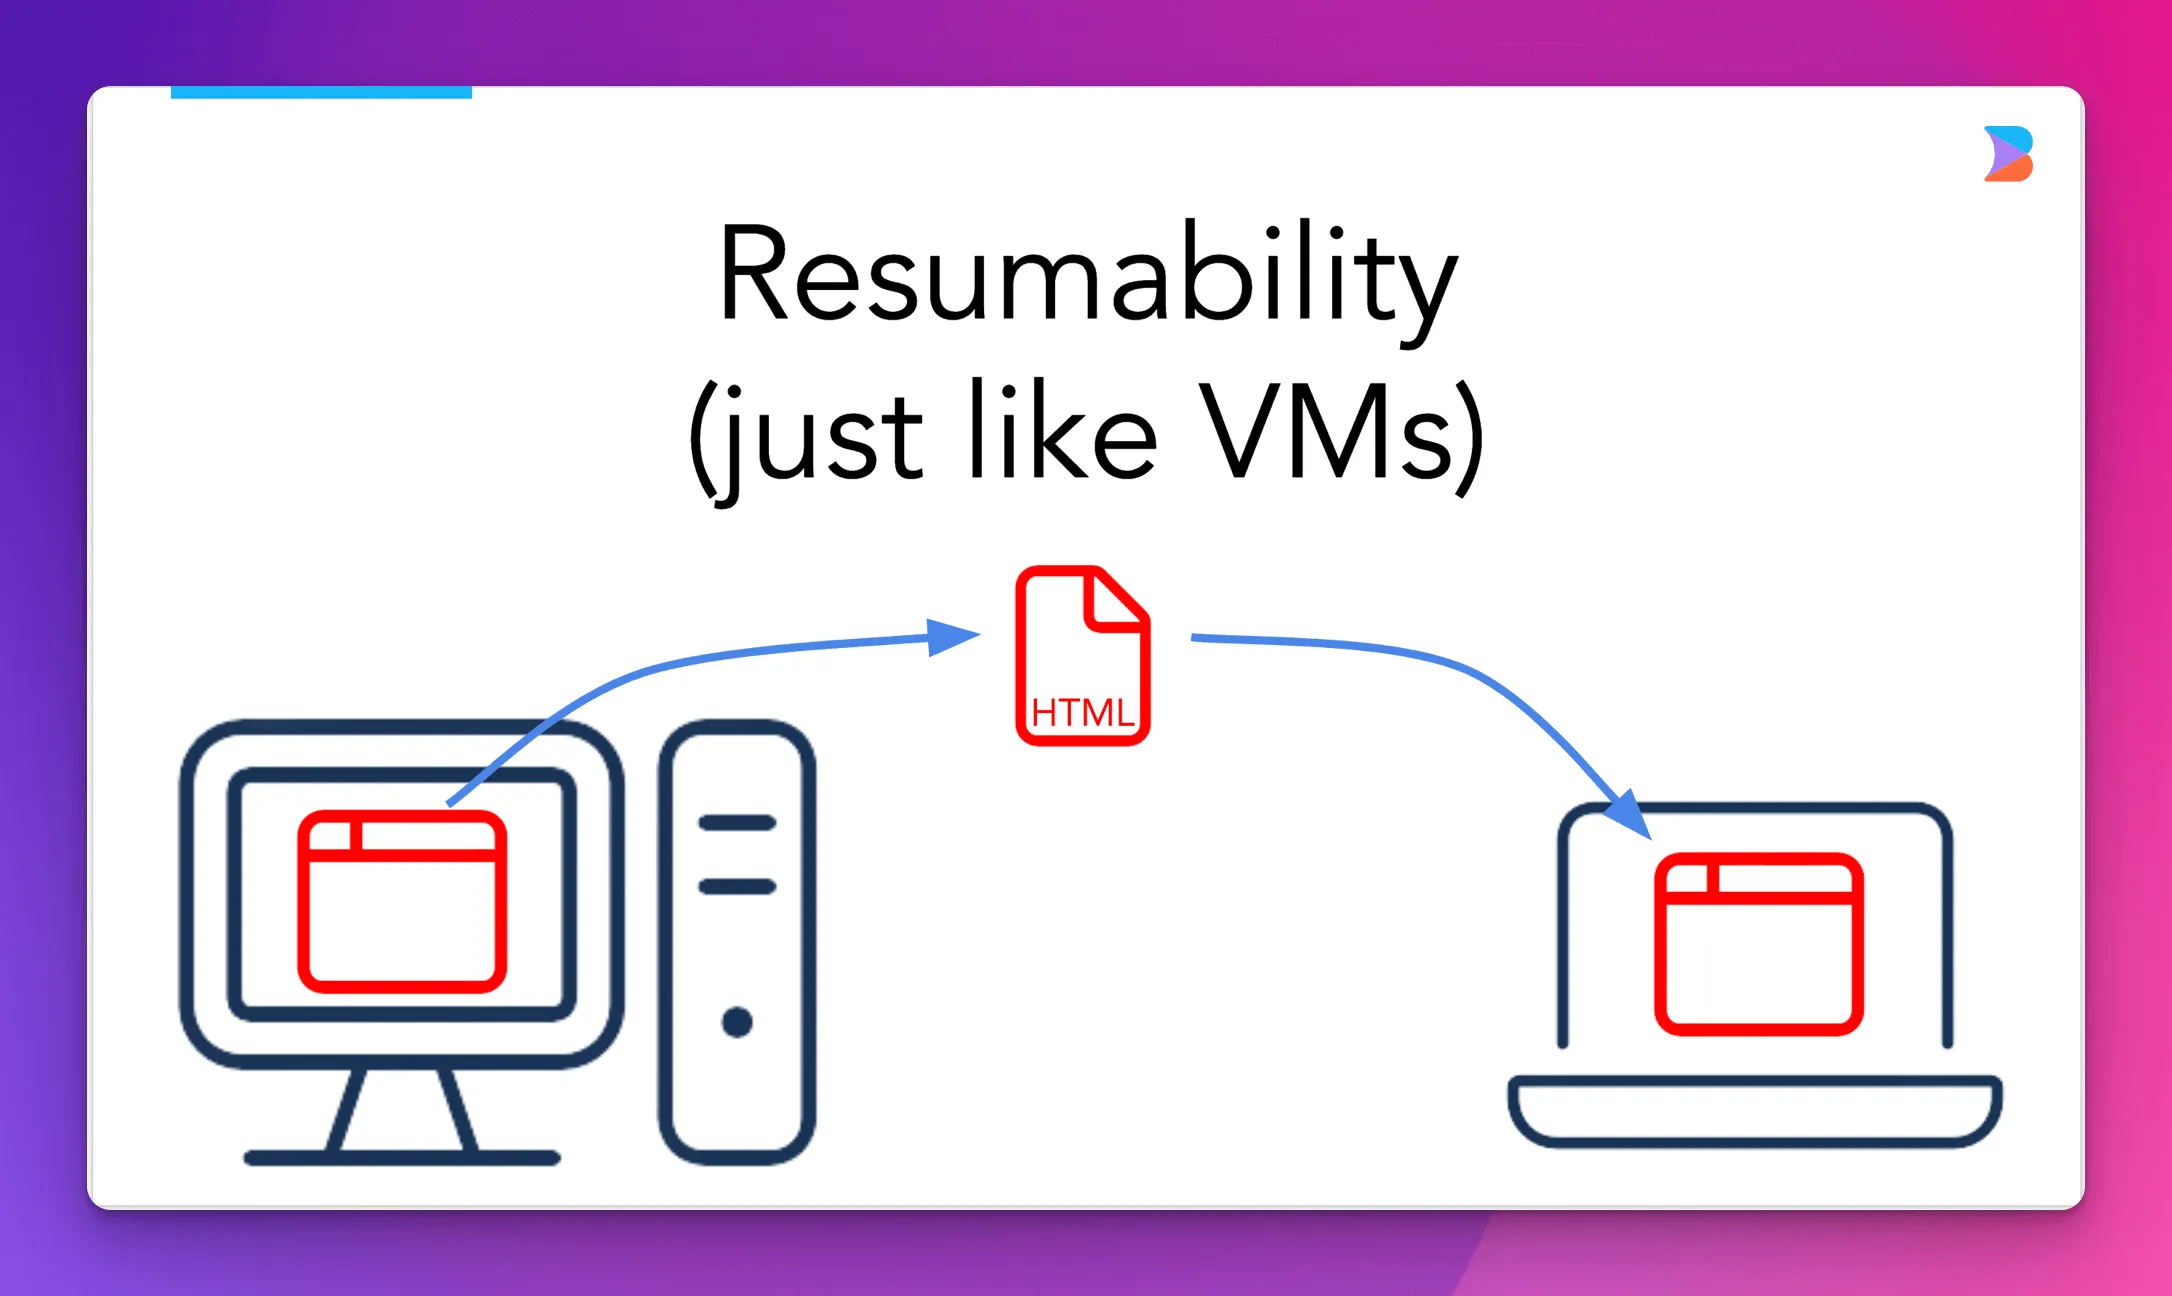 Resumability - just like VMs